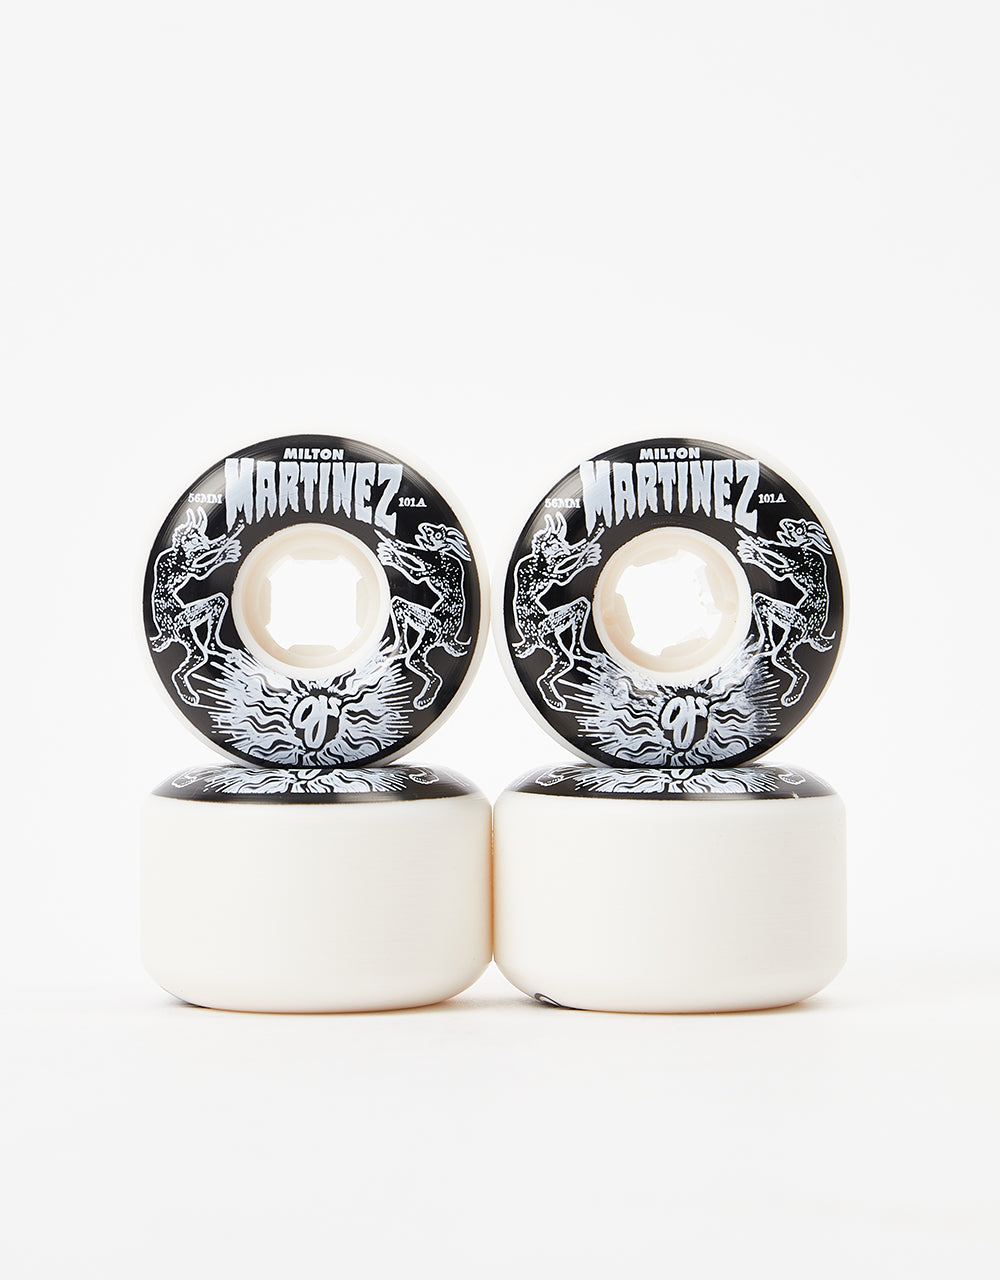 OJ Martinez Criaturas 101a Skateboard Wheels - 56mm